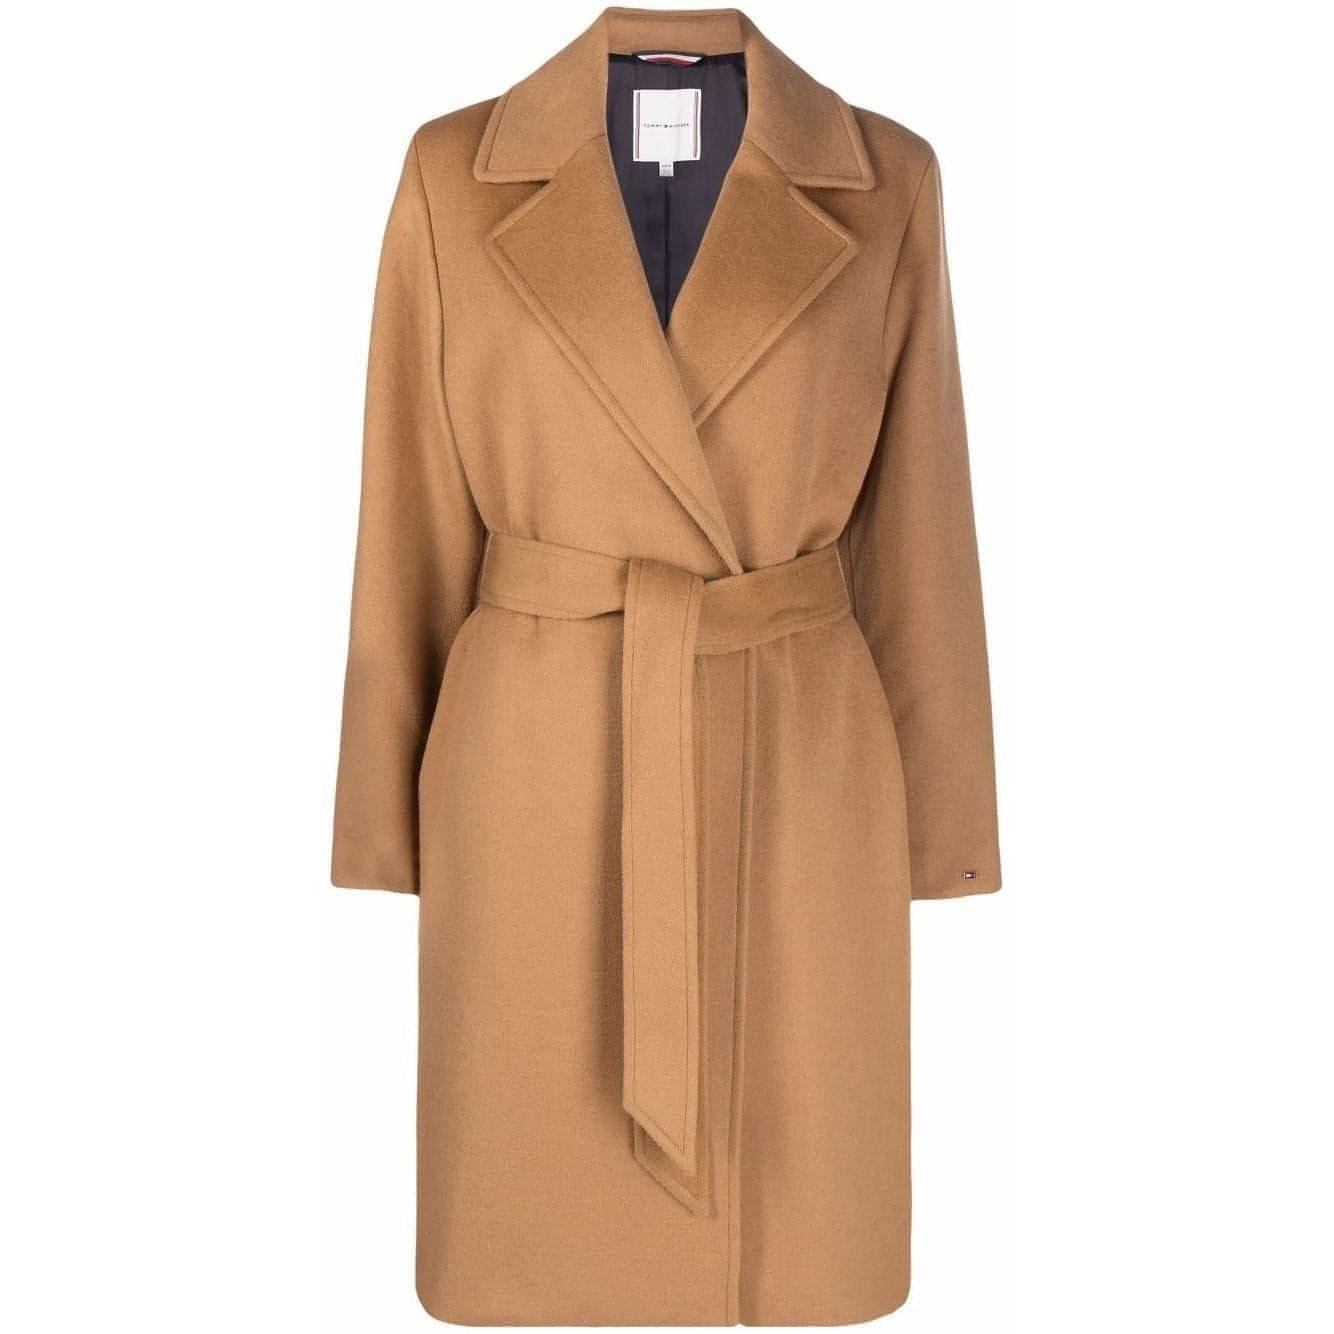 TOMMY HILFIGER moteriškas rudas paltas